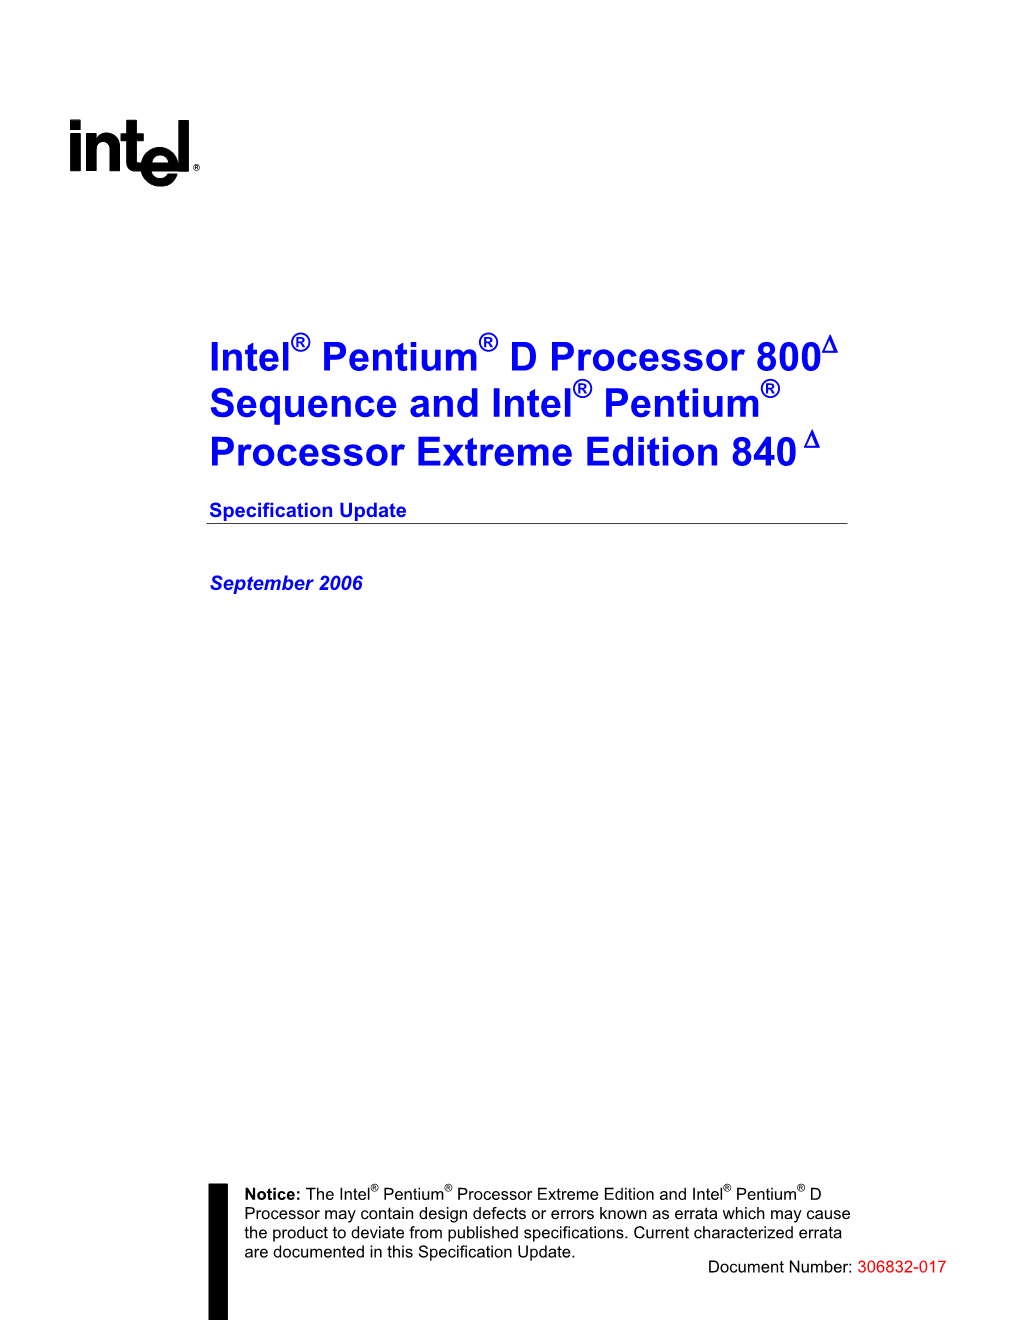 Intel® Pentium® D Processor 800 Sequence and Intel® Pentium® Processor Extreme Edition 840 Specification Update